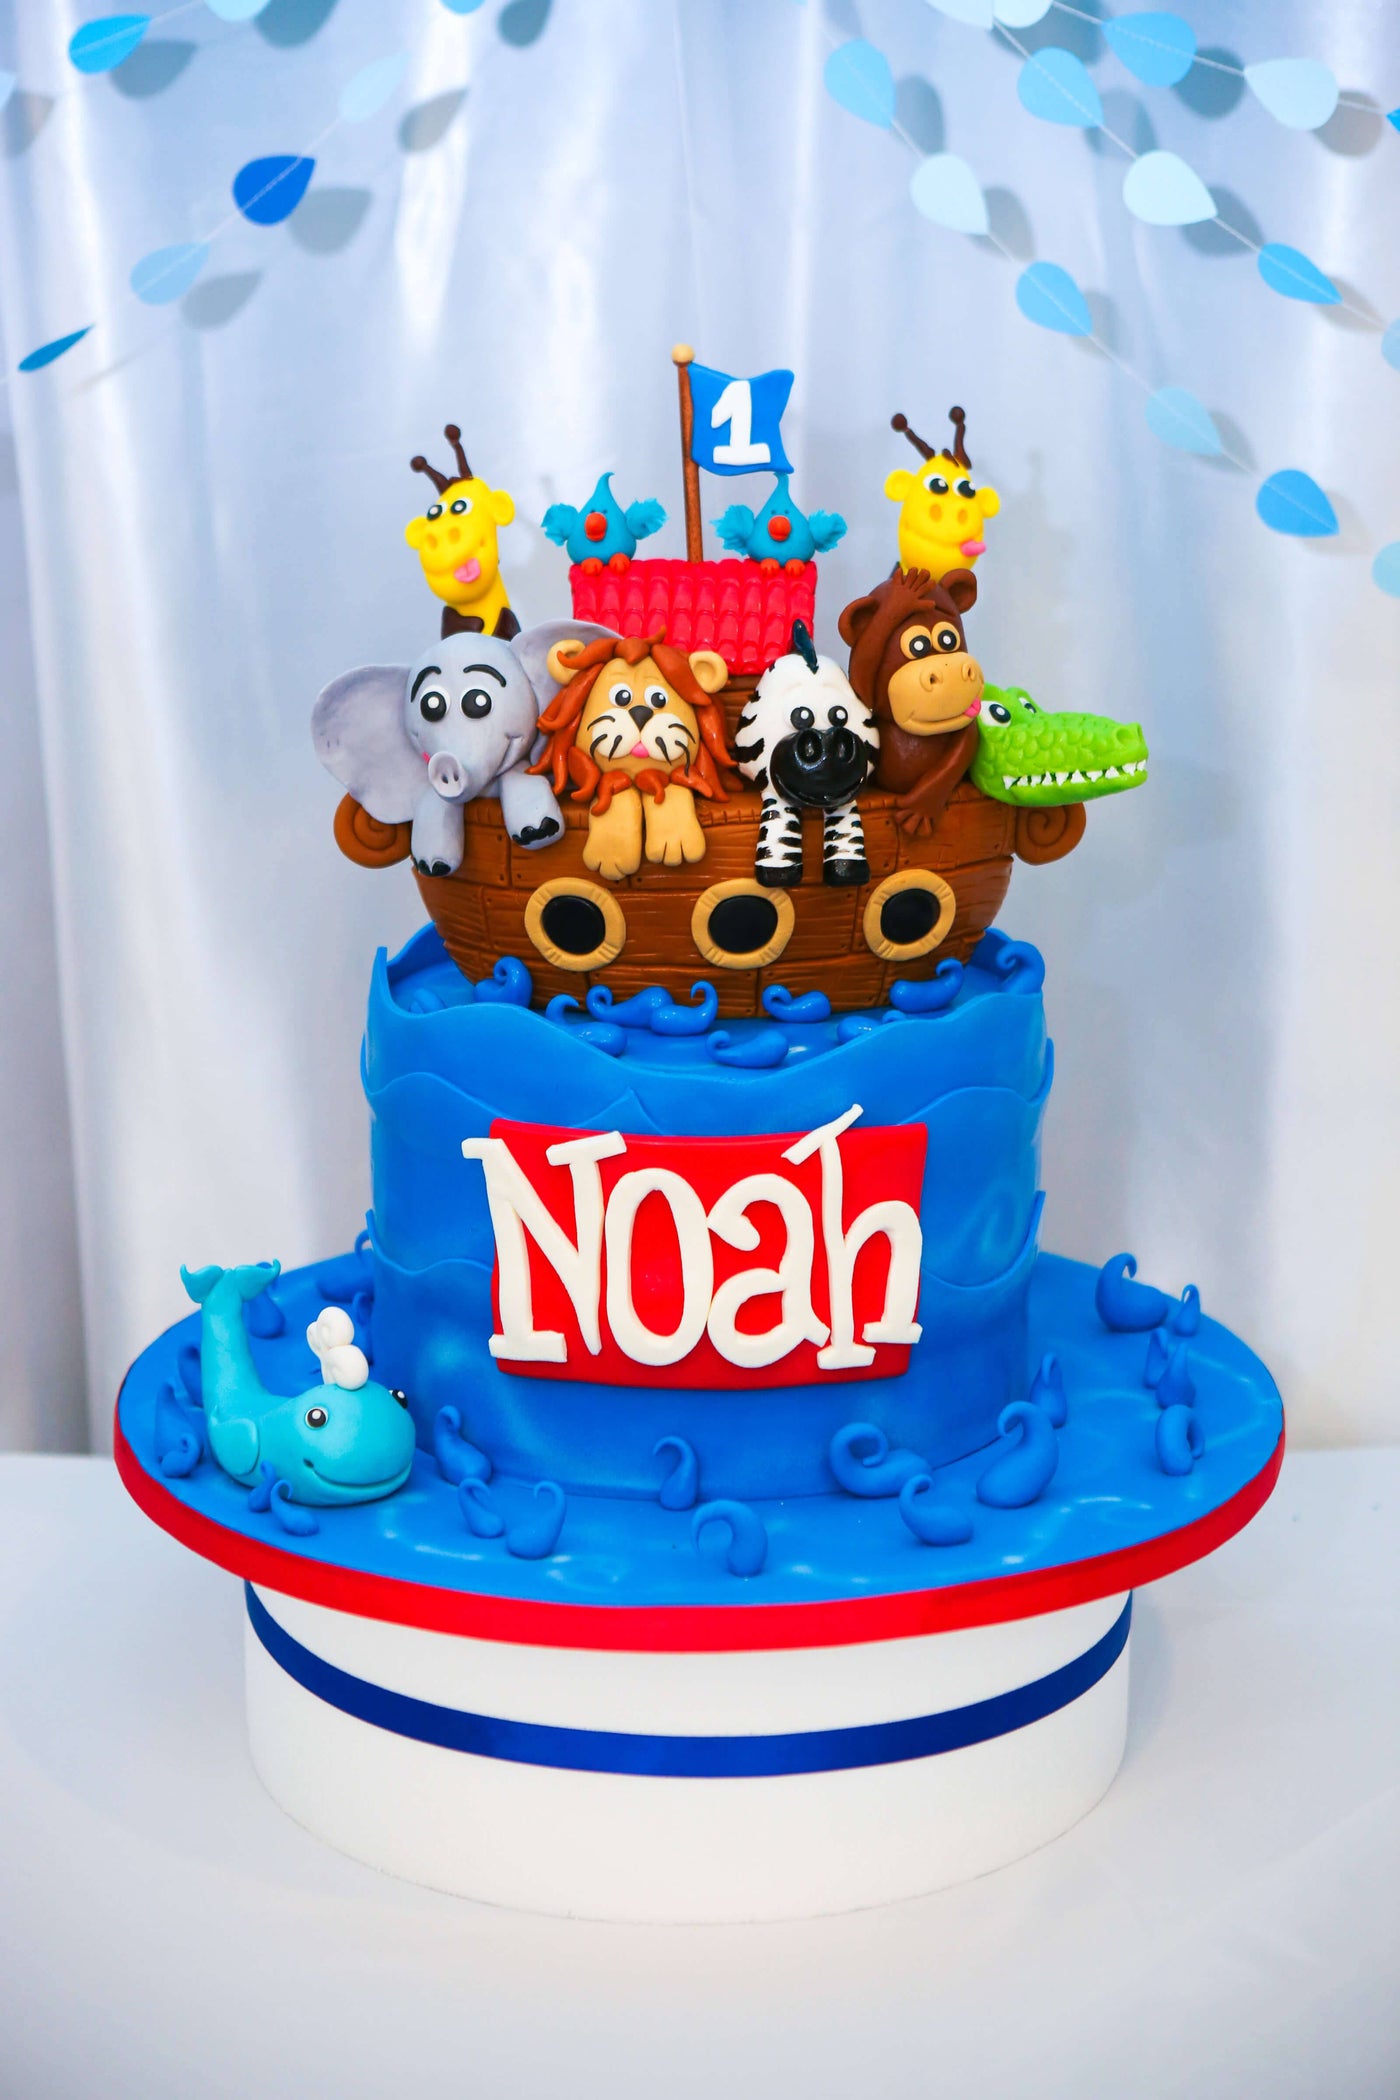 Noah's Ark Birthday Cake - Sweet E's Bake Shop